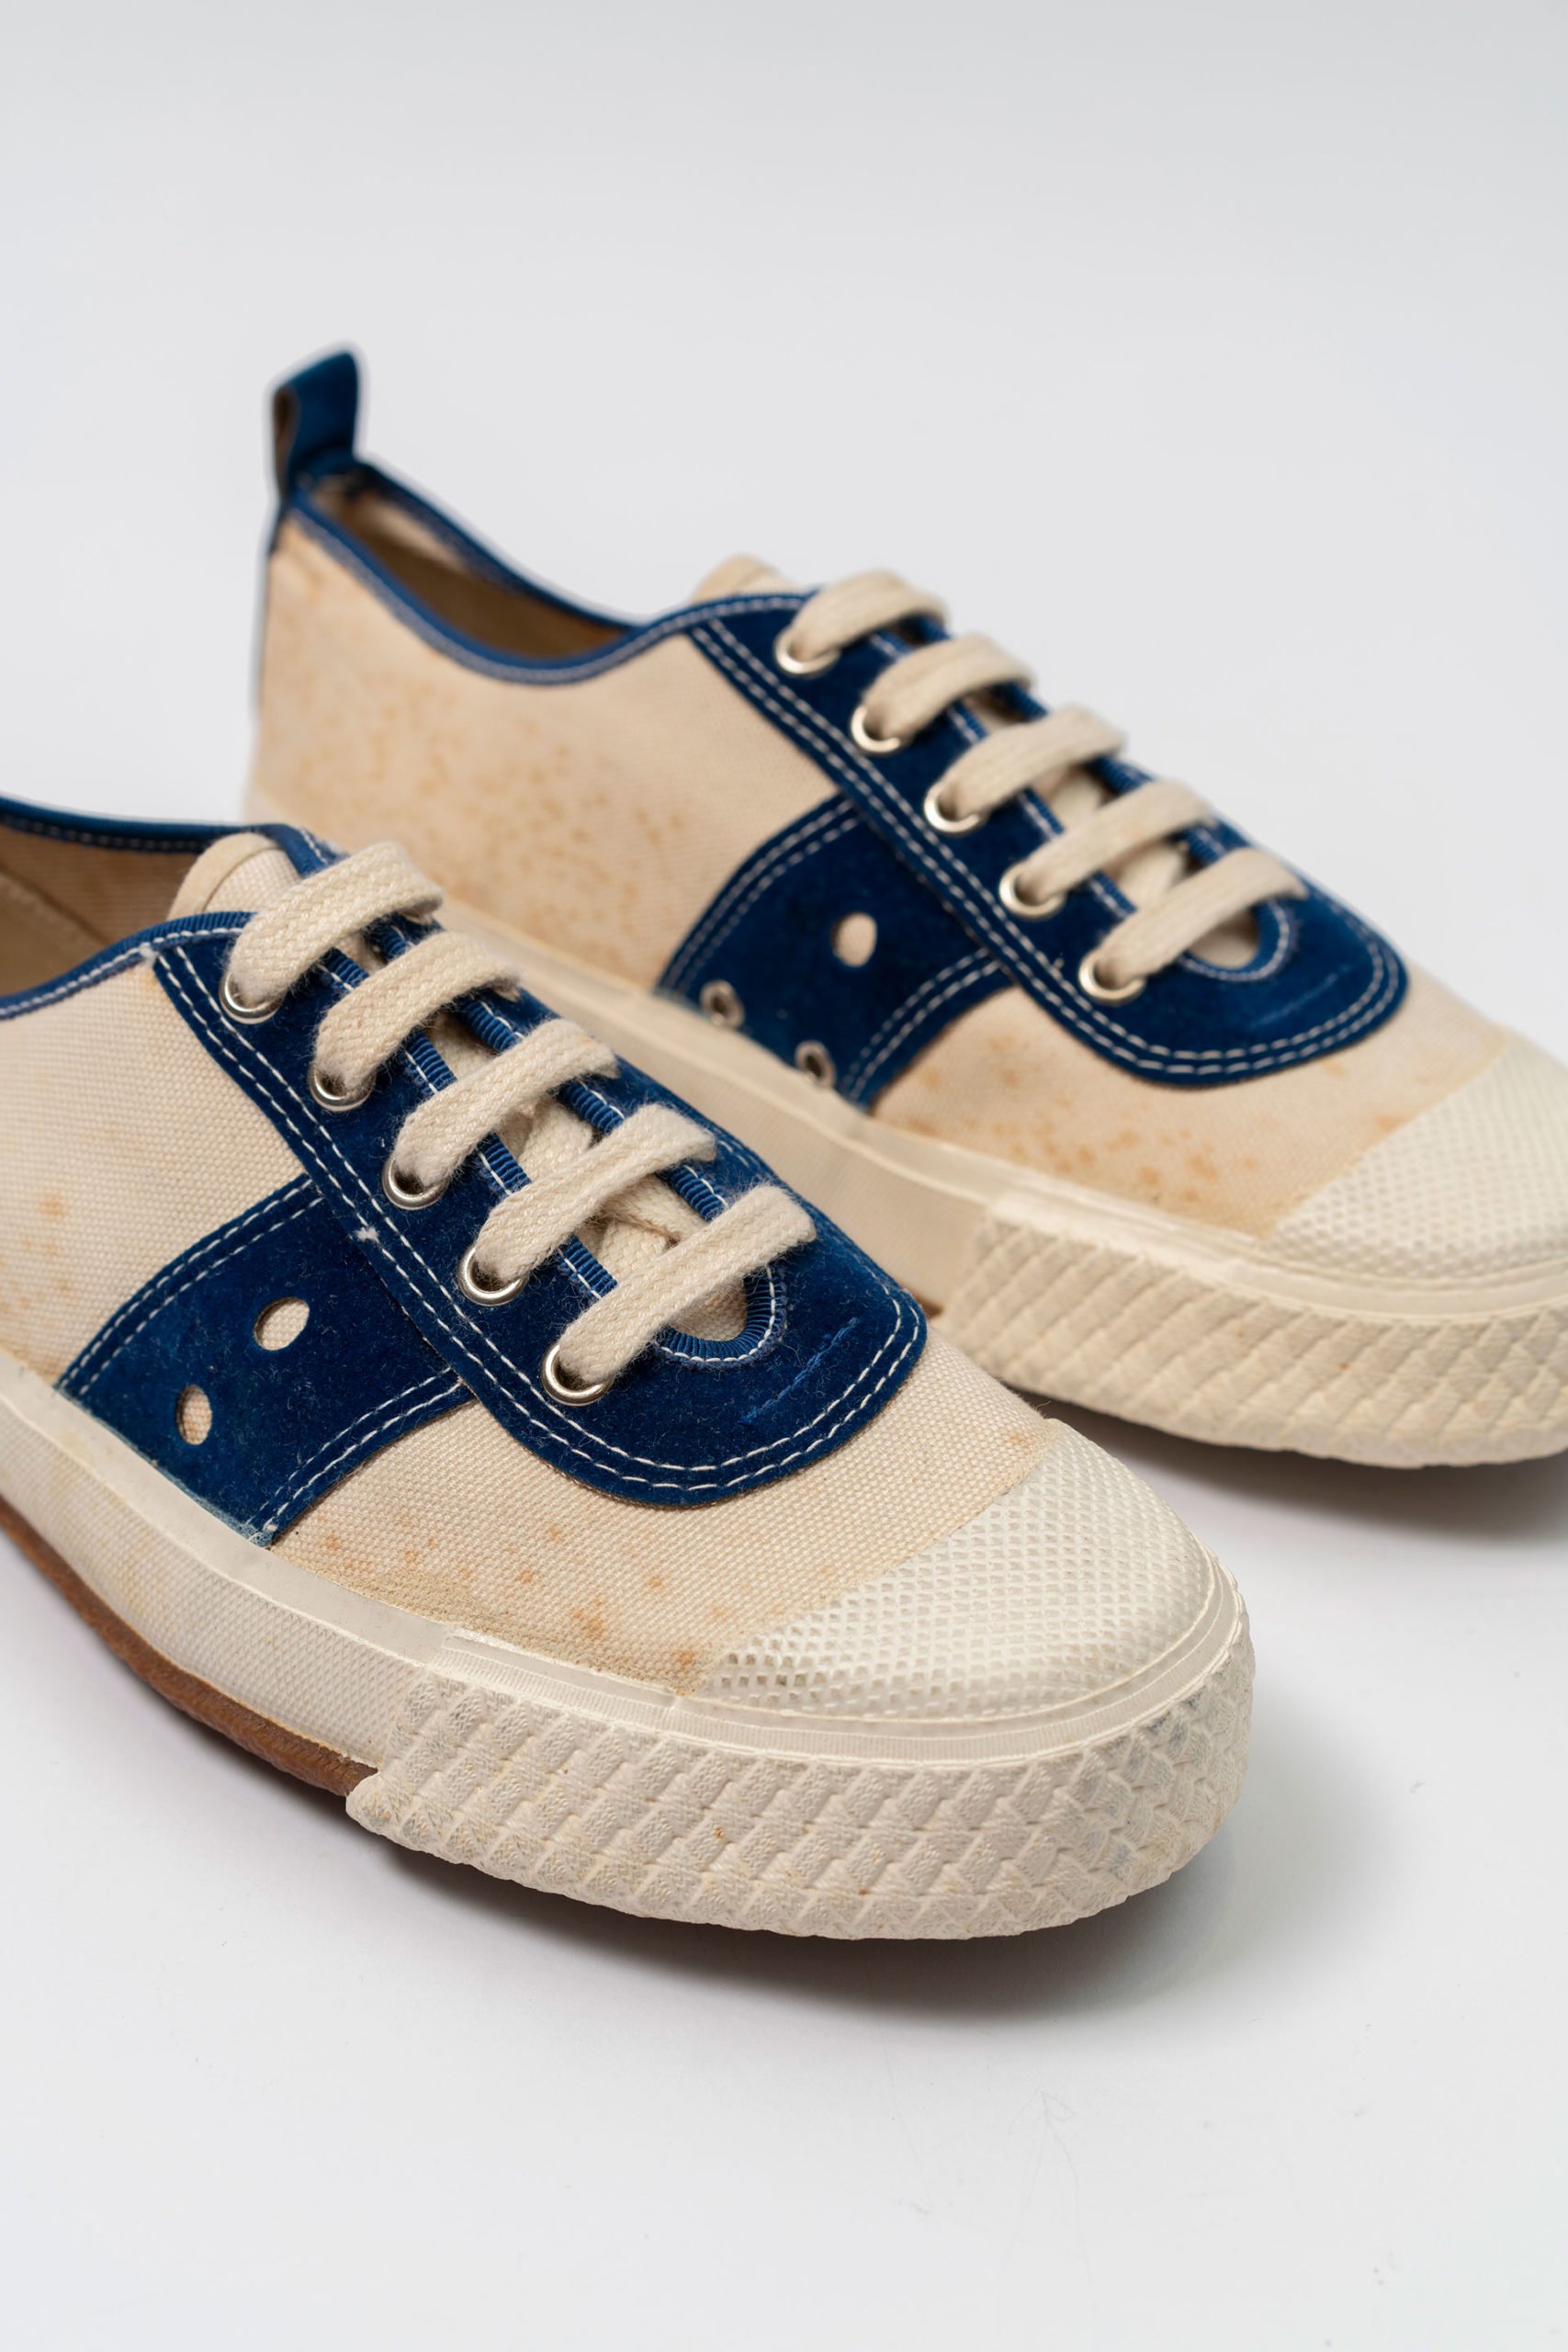 trento-panna-velluto-blu-sneakers-vintage-trentovintage-vintagesneakers-duemilanomarittima-letsdue-letsdueit-deadstock-deadstockvintage_05-scaled